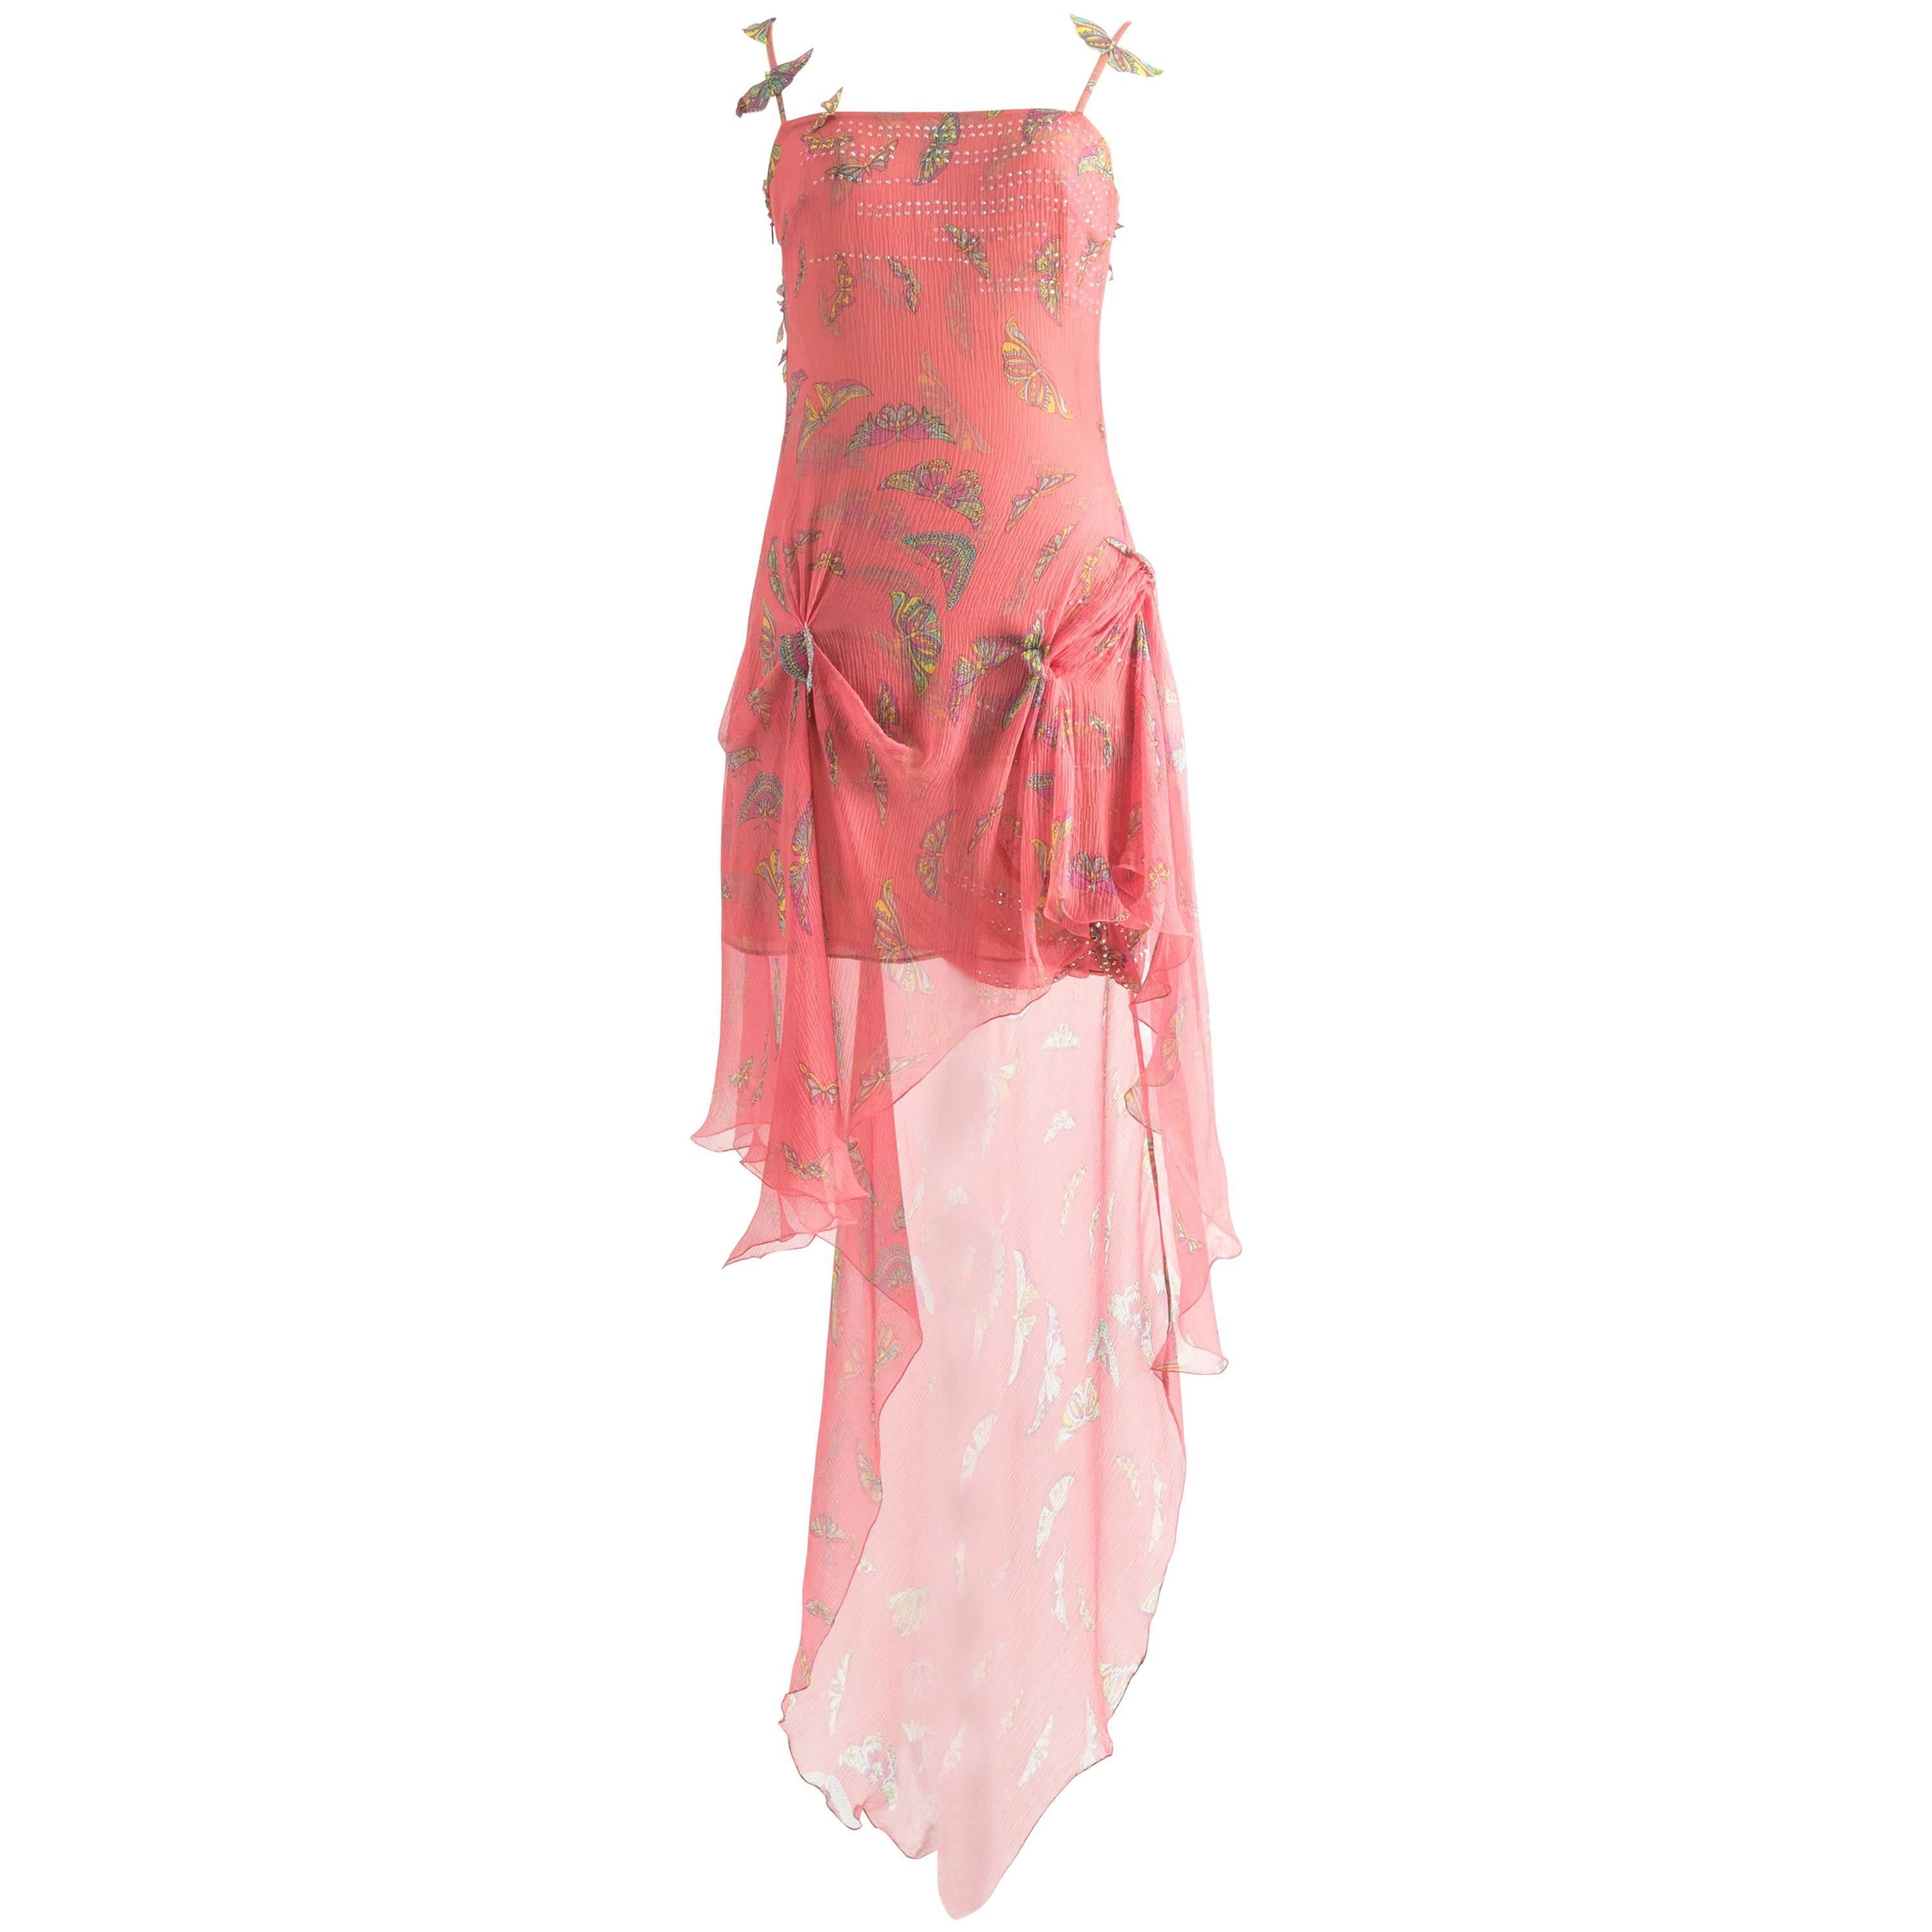 Gianni Versace Autumn-Winter 1999 pink silk chiffon butterfly mini dress 